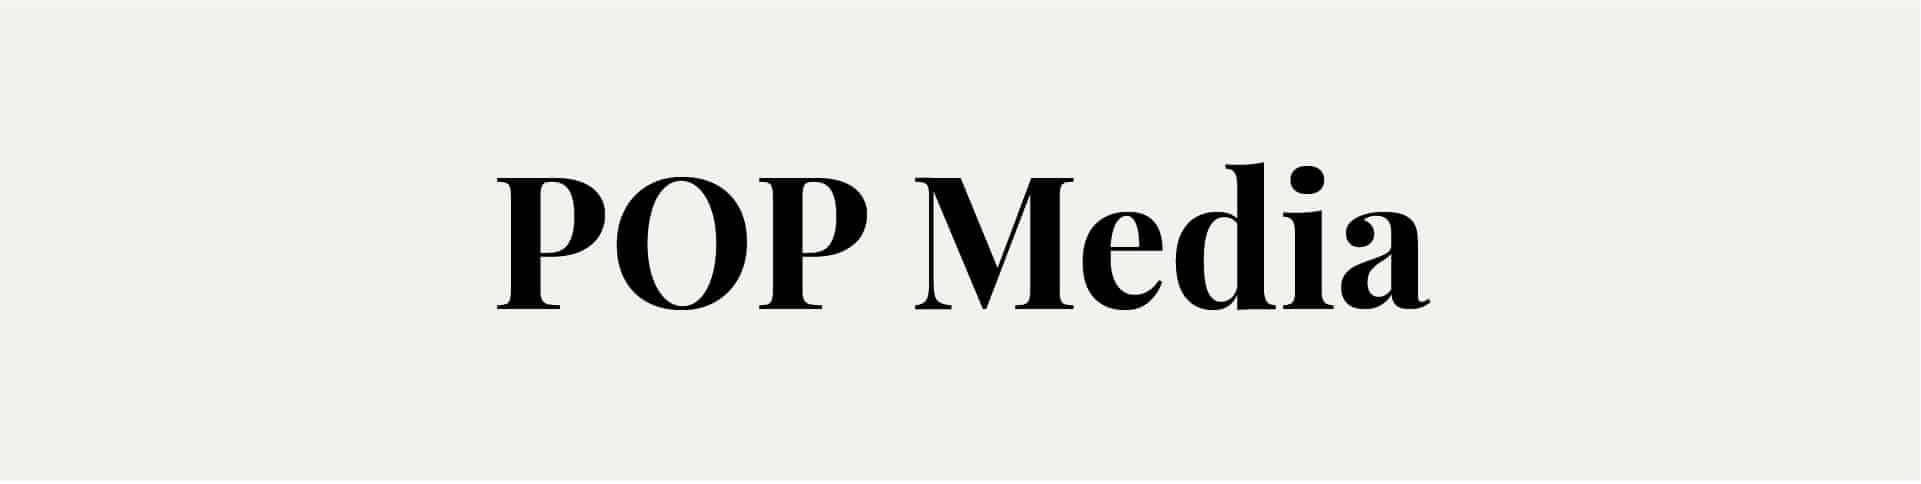 POP Communications - POP Media